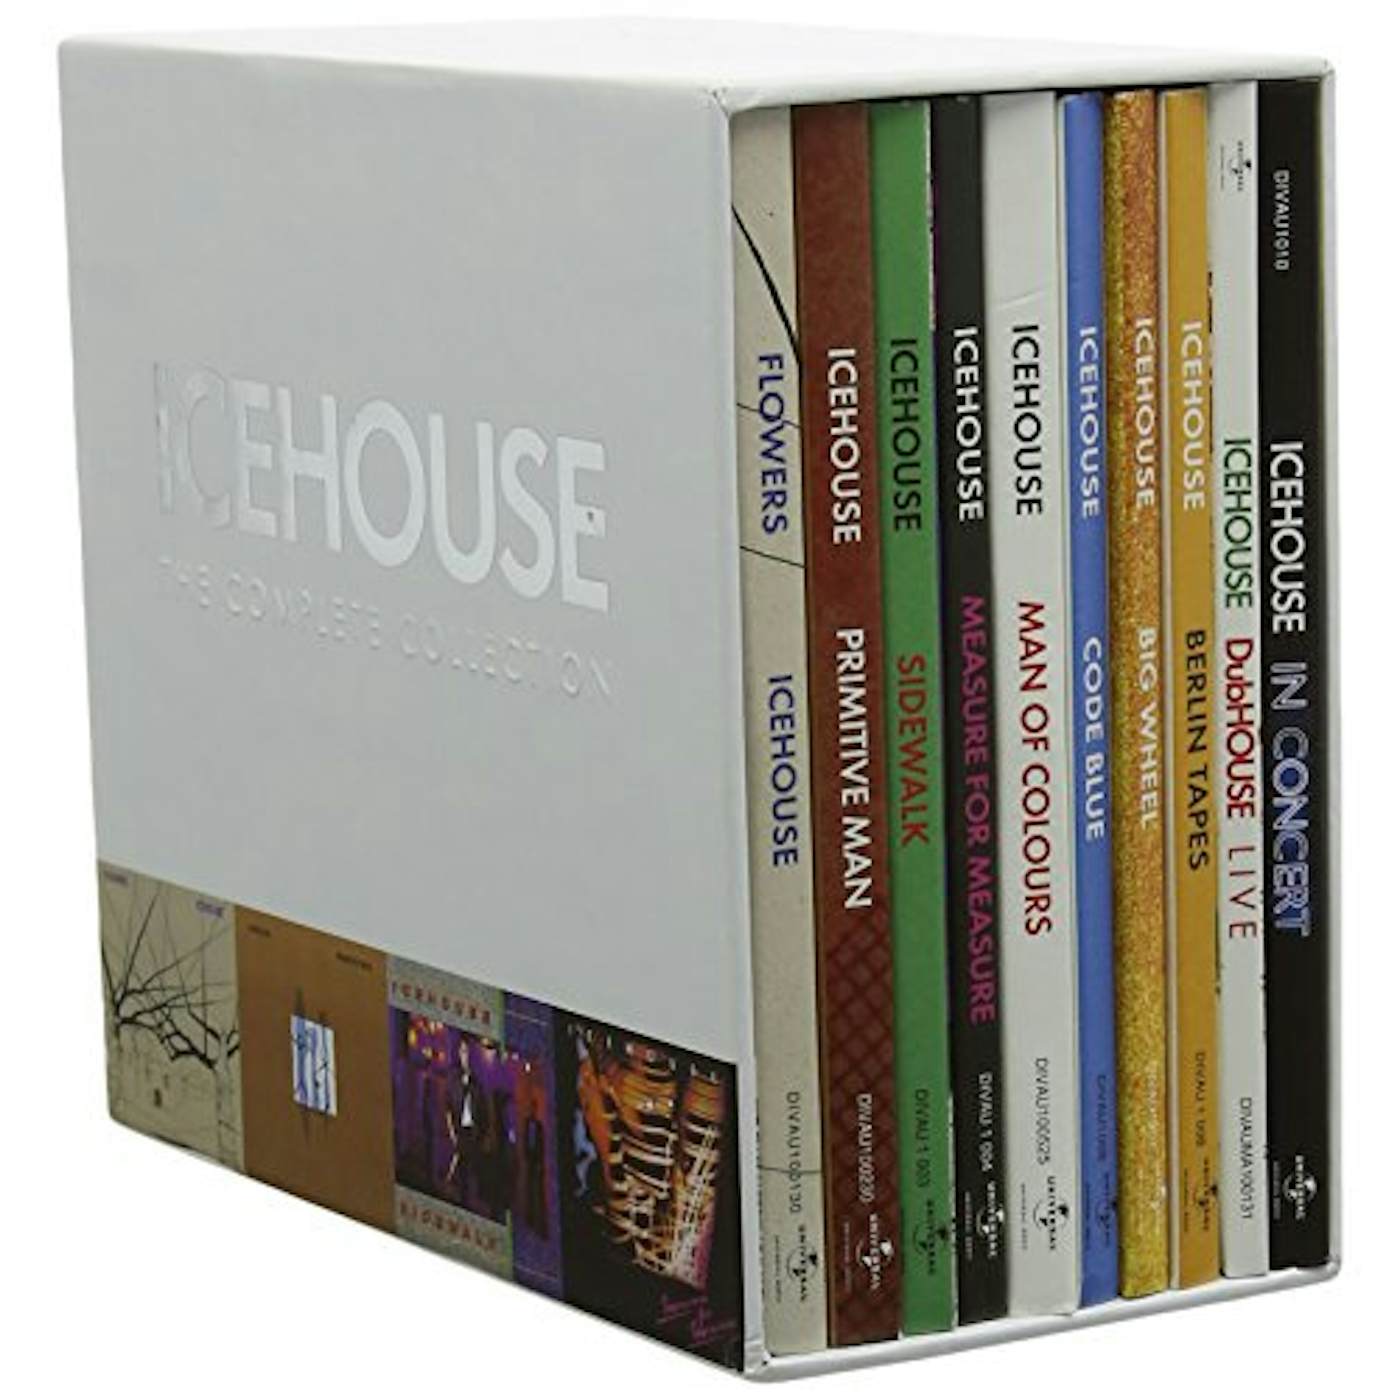 ICEHOUSE: 40TH ANNIVERSARY BOX SET (PAL REGION 0) CD